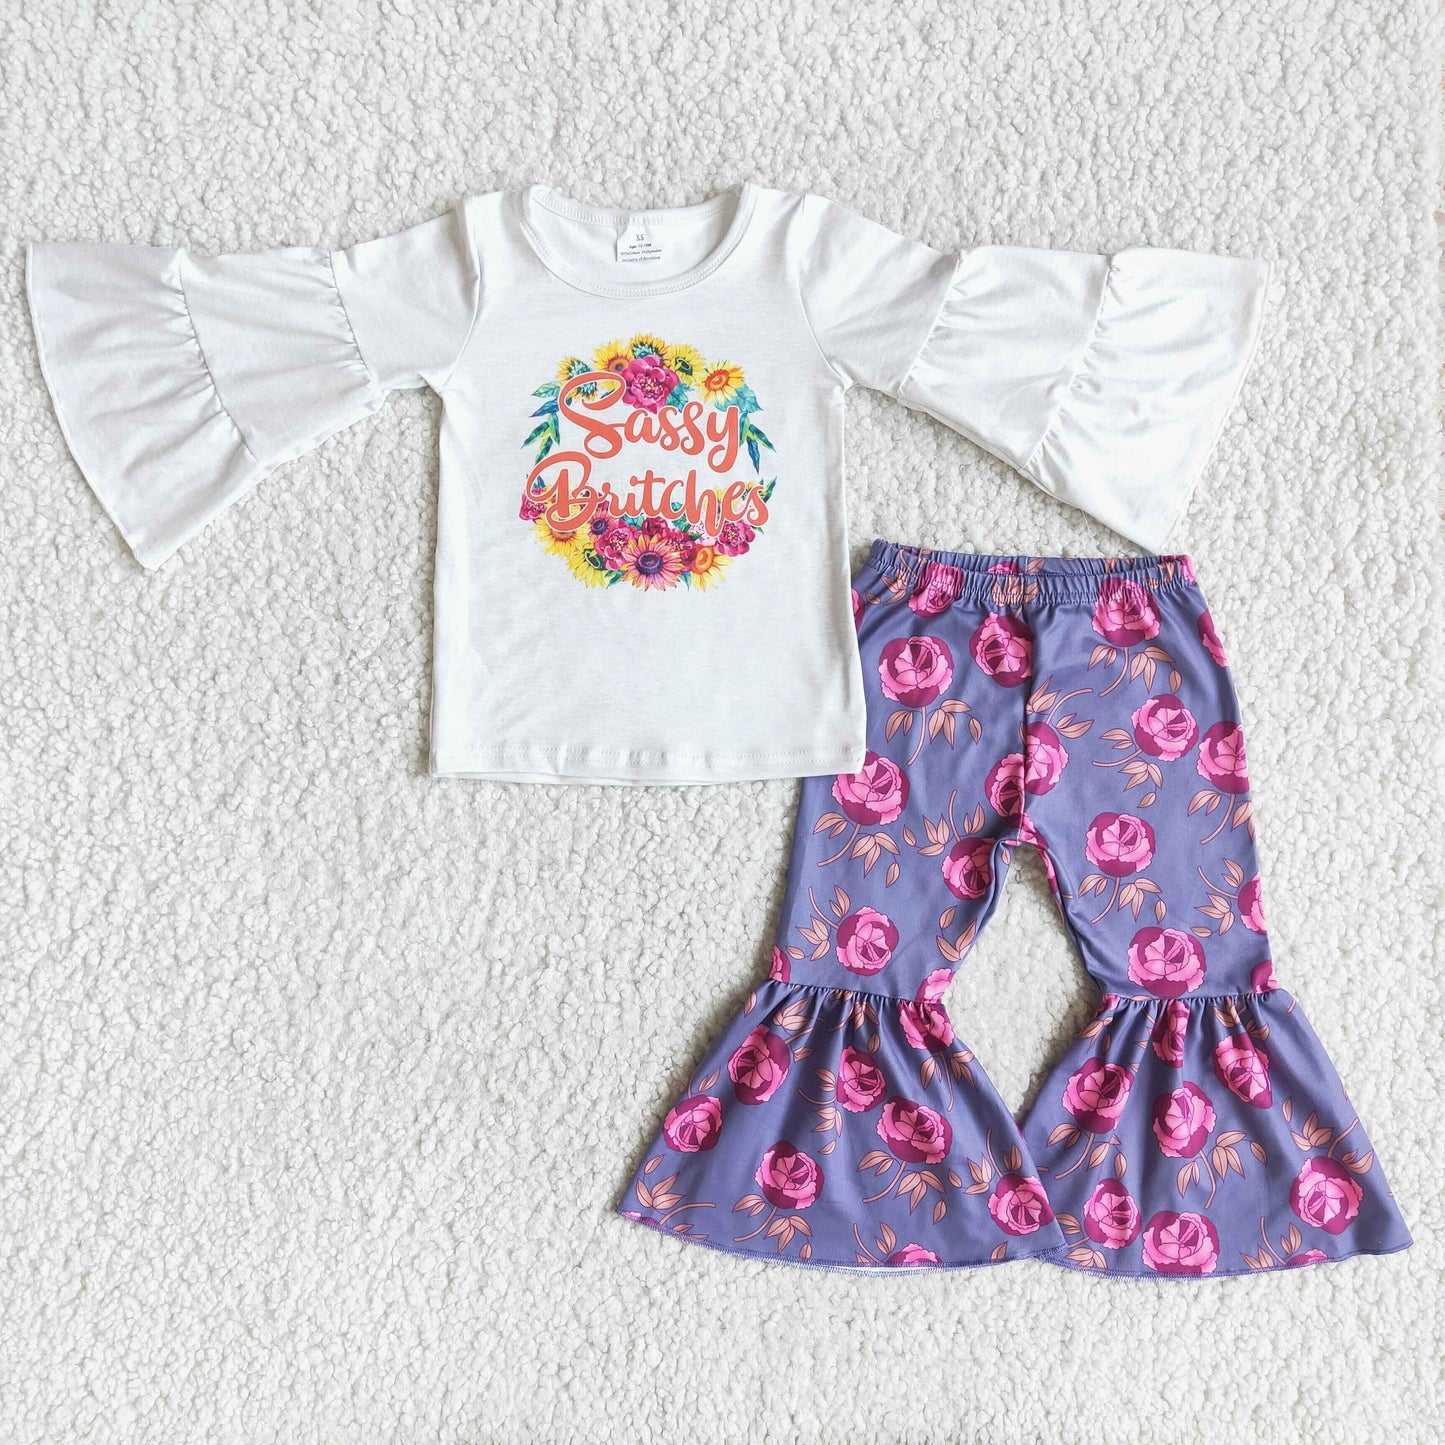 Sassy britches shirt floral pants girls boutique clothes